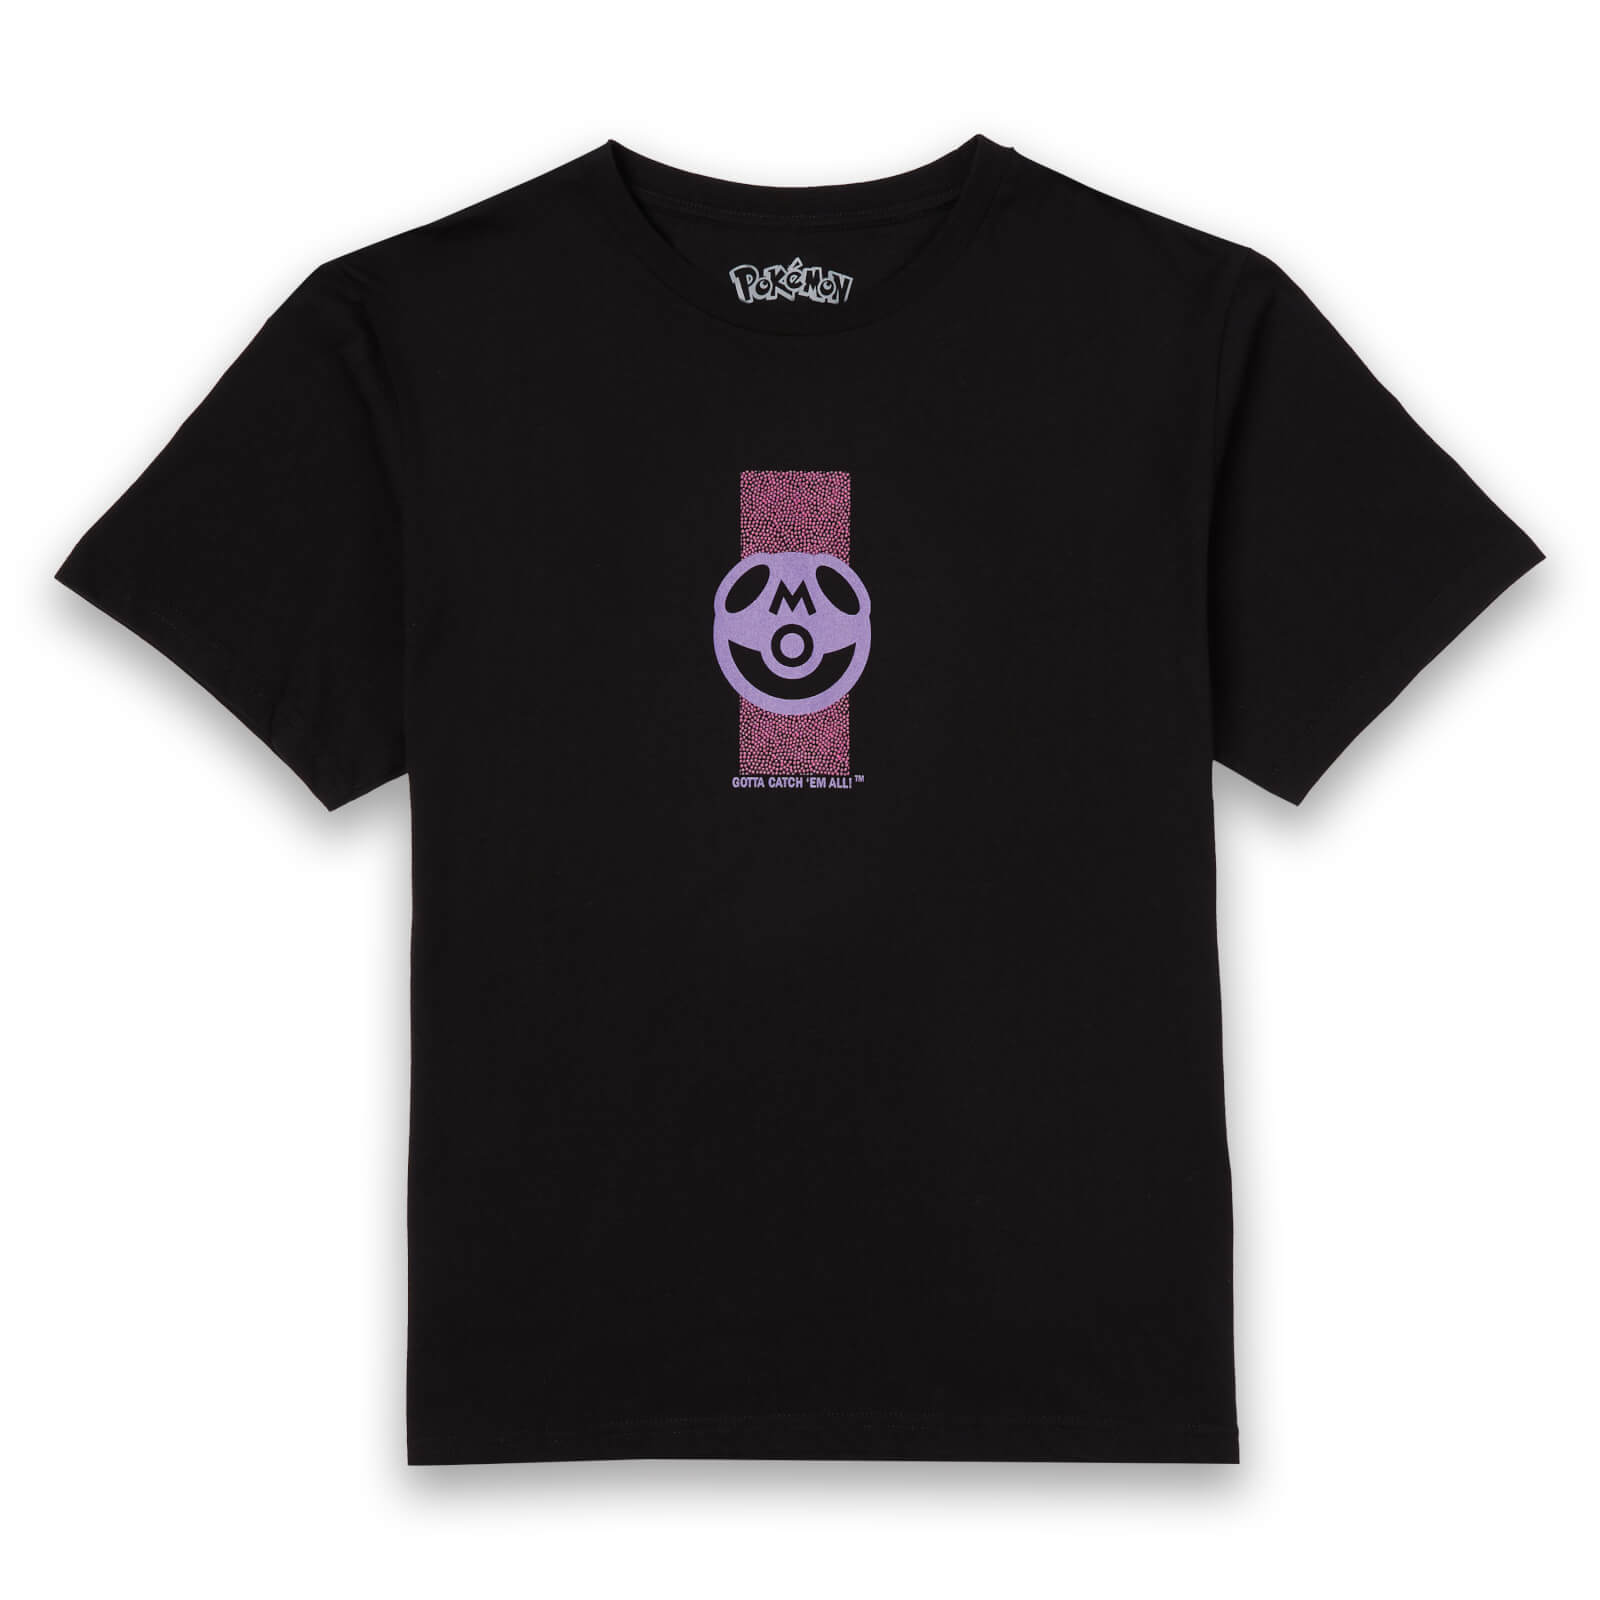 Pokémon Master Ball Unisex T-Shirt - Black - S - Black